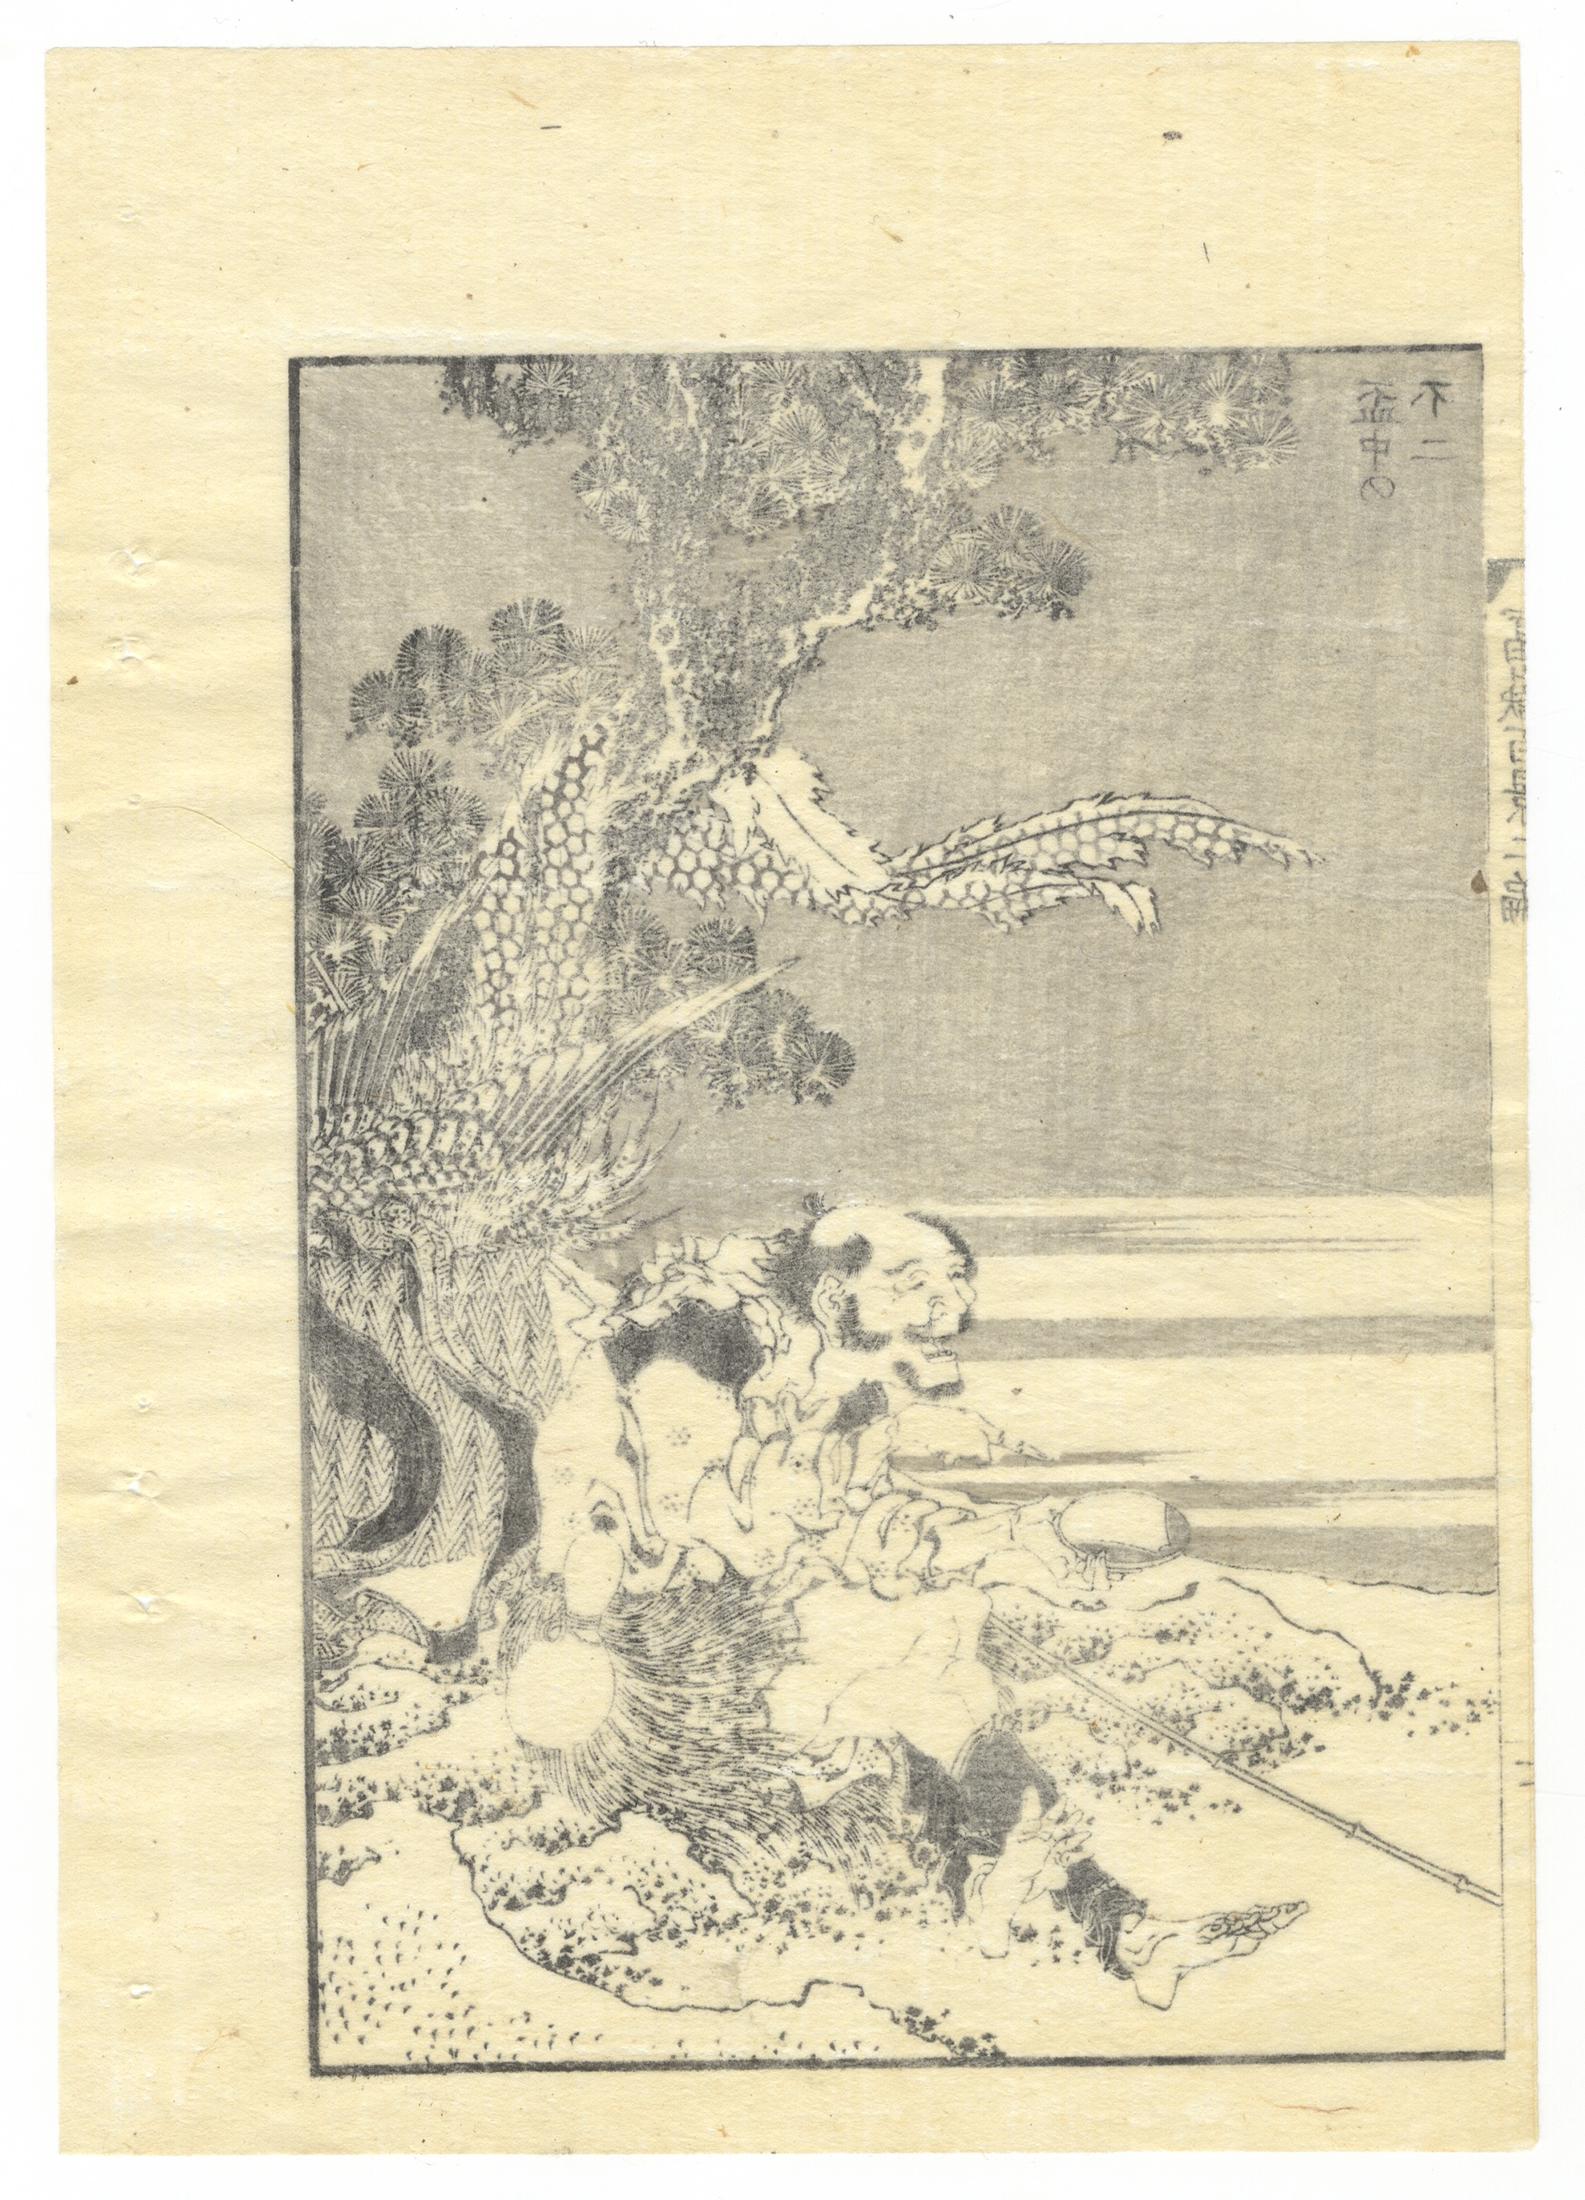 Artist: Katsushika Hokusai
Title: Fuji inside the sake cup
Series: 100 Views of Mt Fuji, volume 2
Publisher: Toheki-do Eirakuya Toshiro
Date: 1835-1880
Size: 22.5 x 15.7 cm
Condition report: Binding marks. Minor stains on bottom and top of